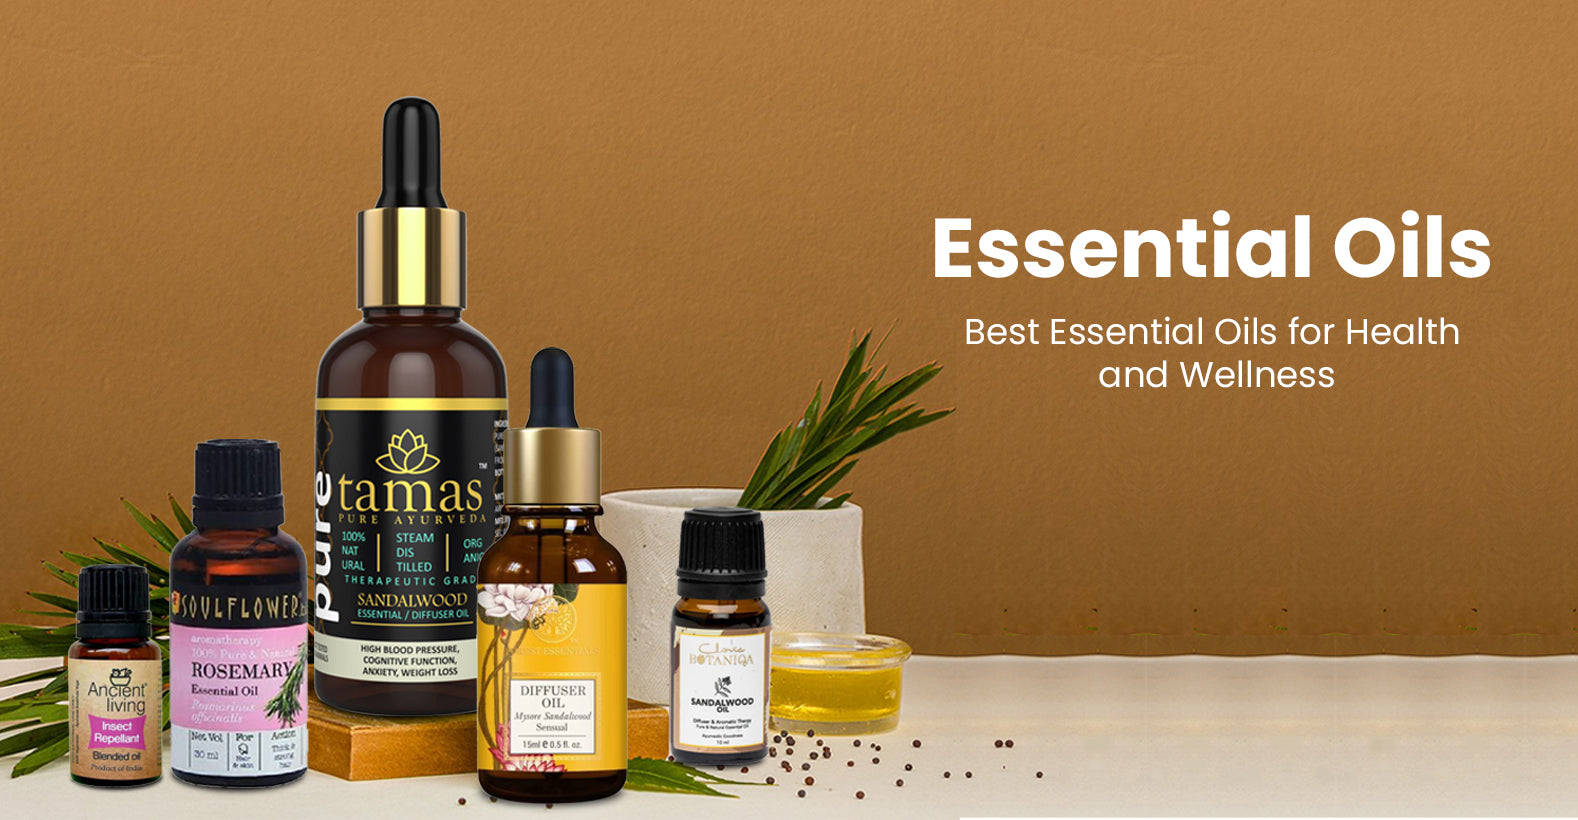 Essential Oils - Uses, Ingredients, Health Benefits, Types, Properties